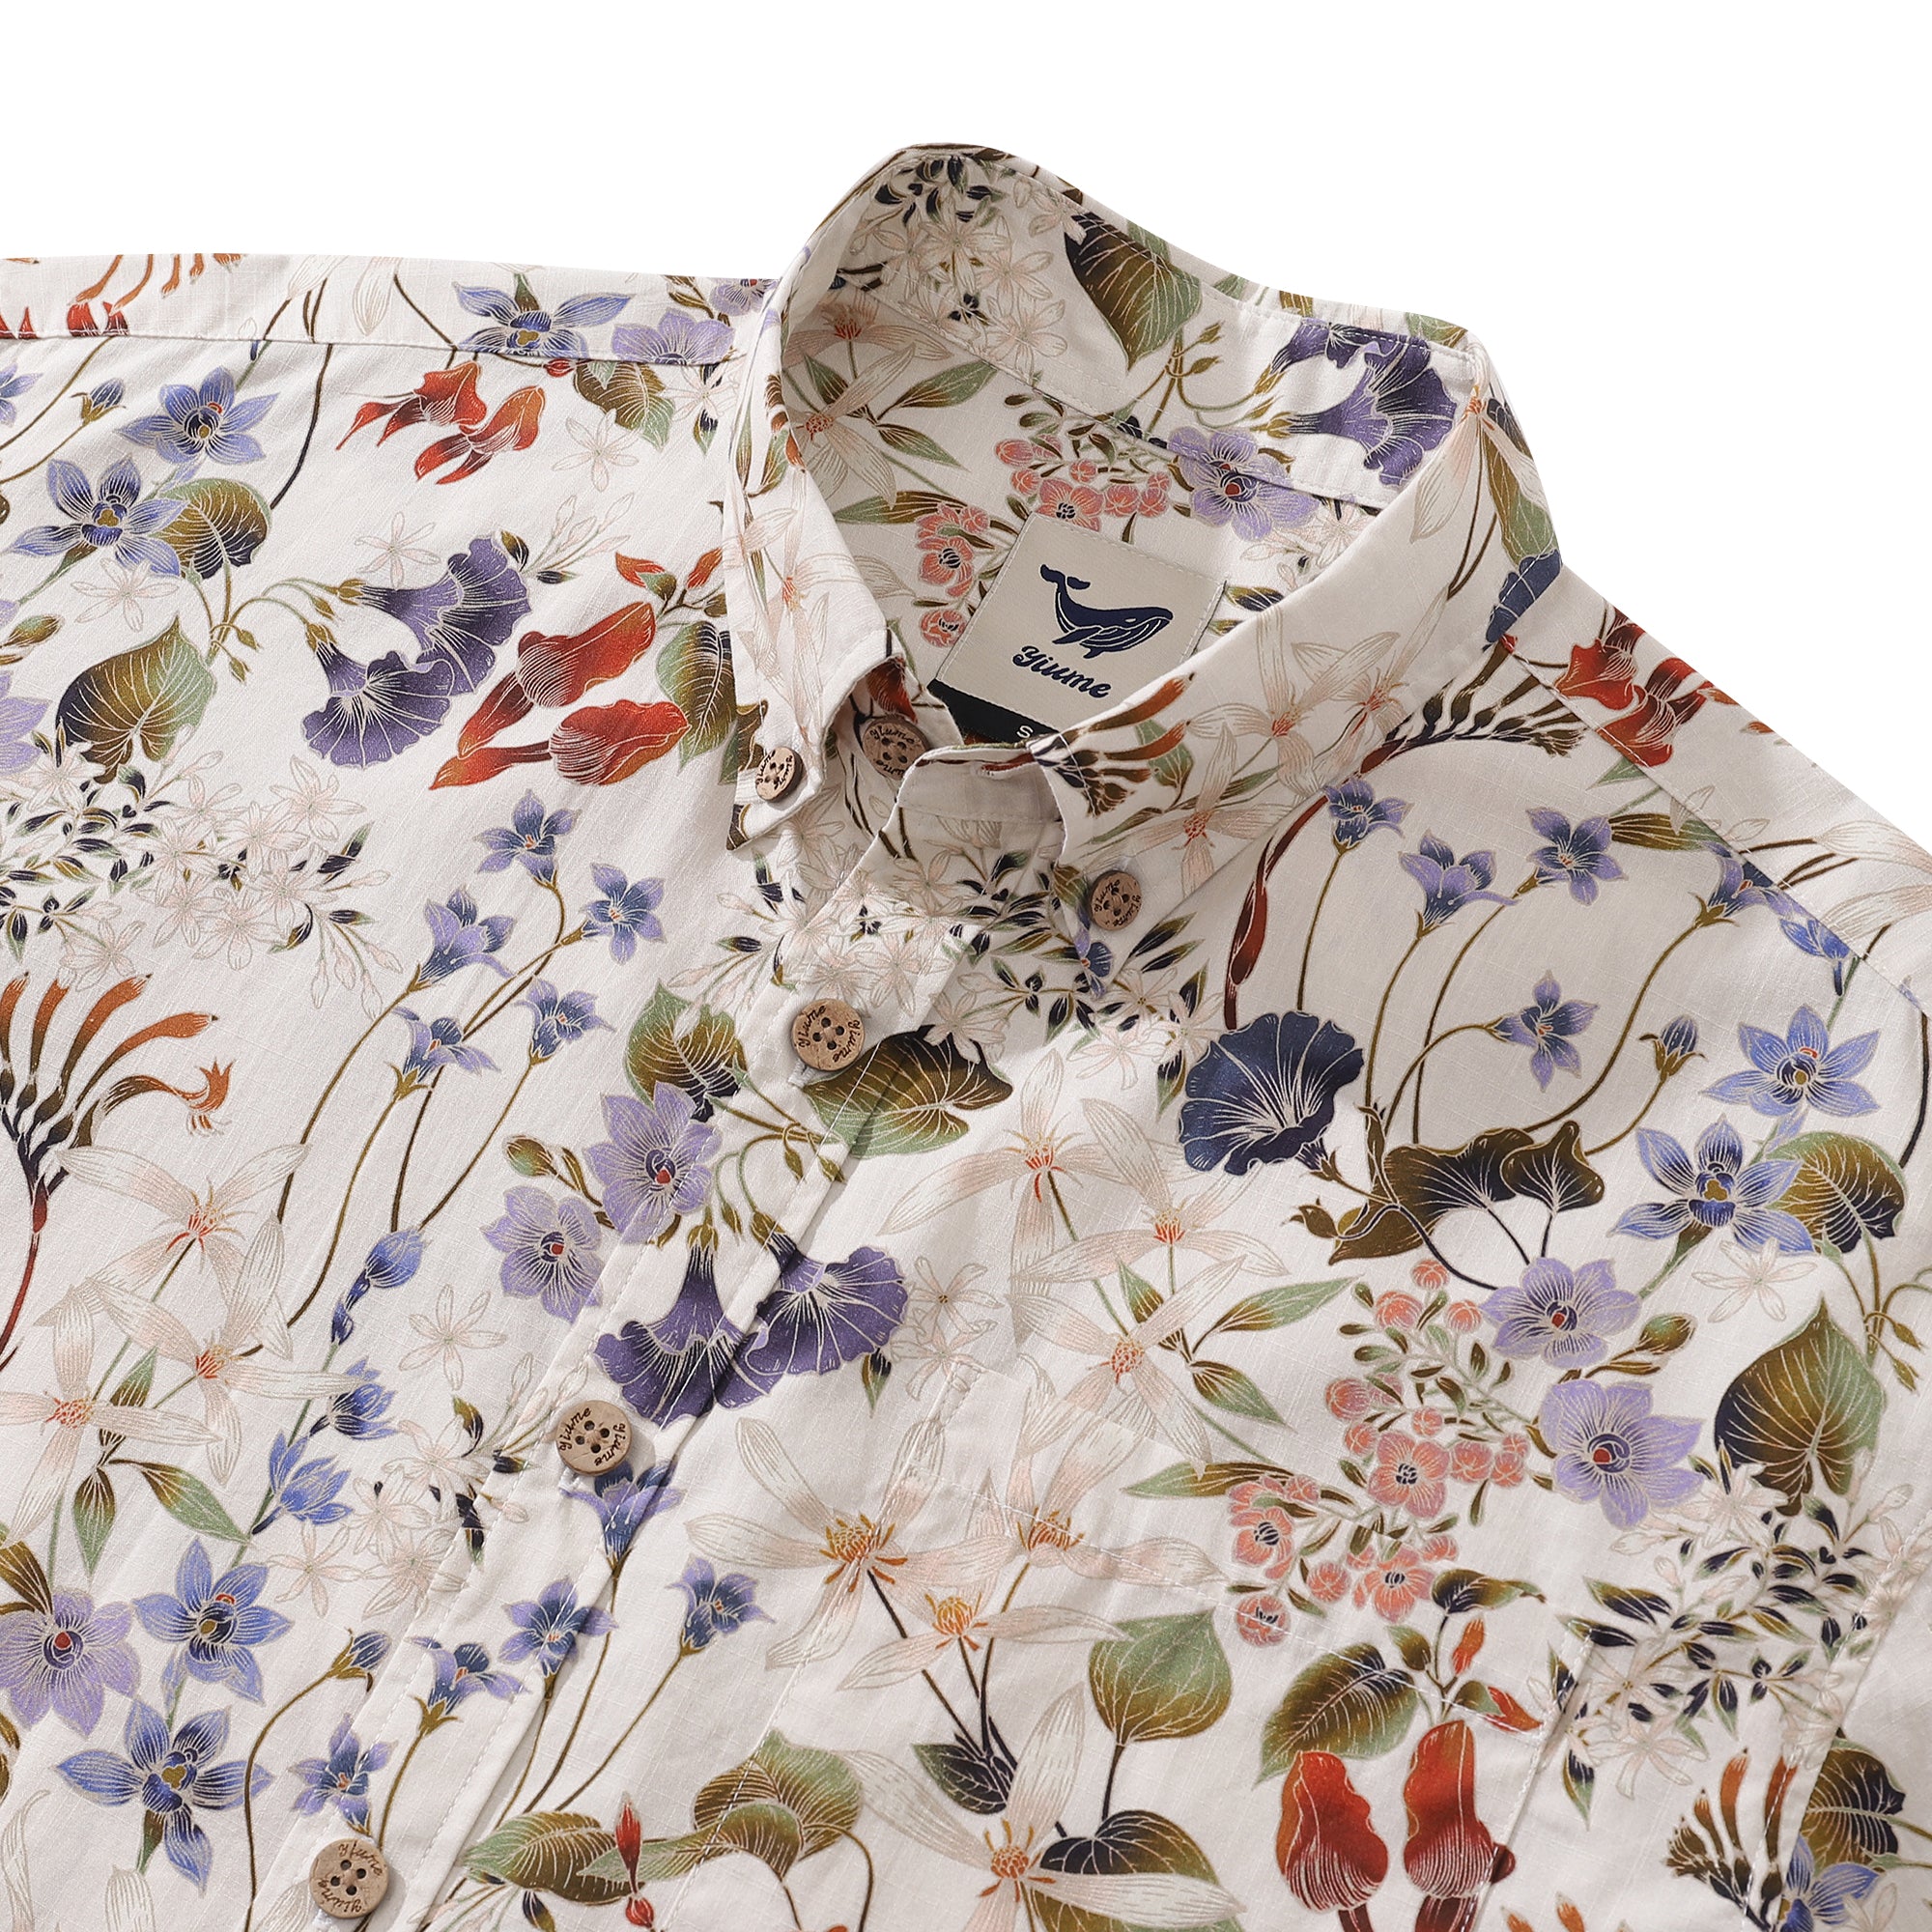 1930s Hawaiian Shirt For Men Wildflowers Print Cotton Short Sleeve Aloha Shirt